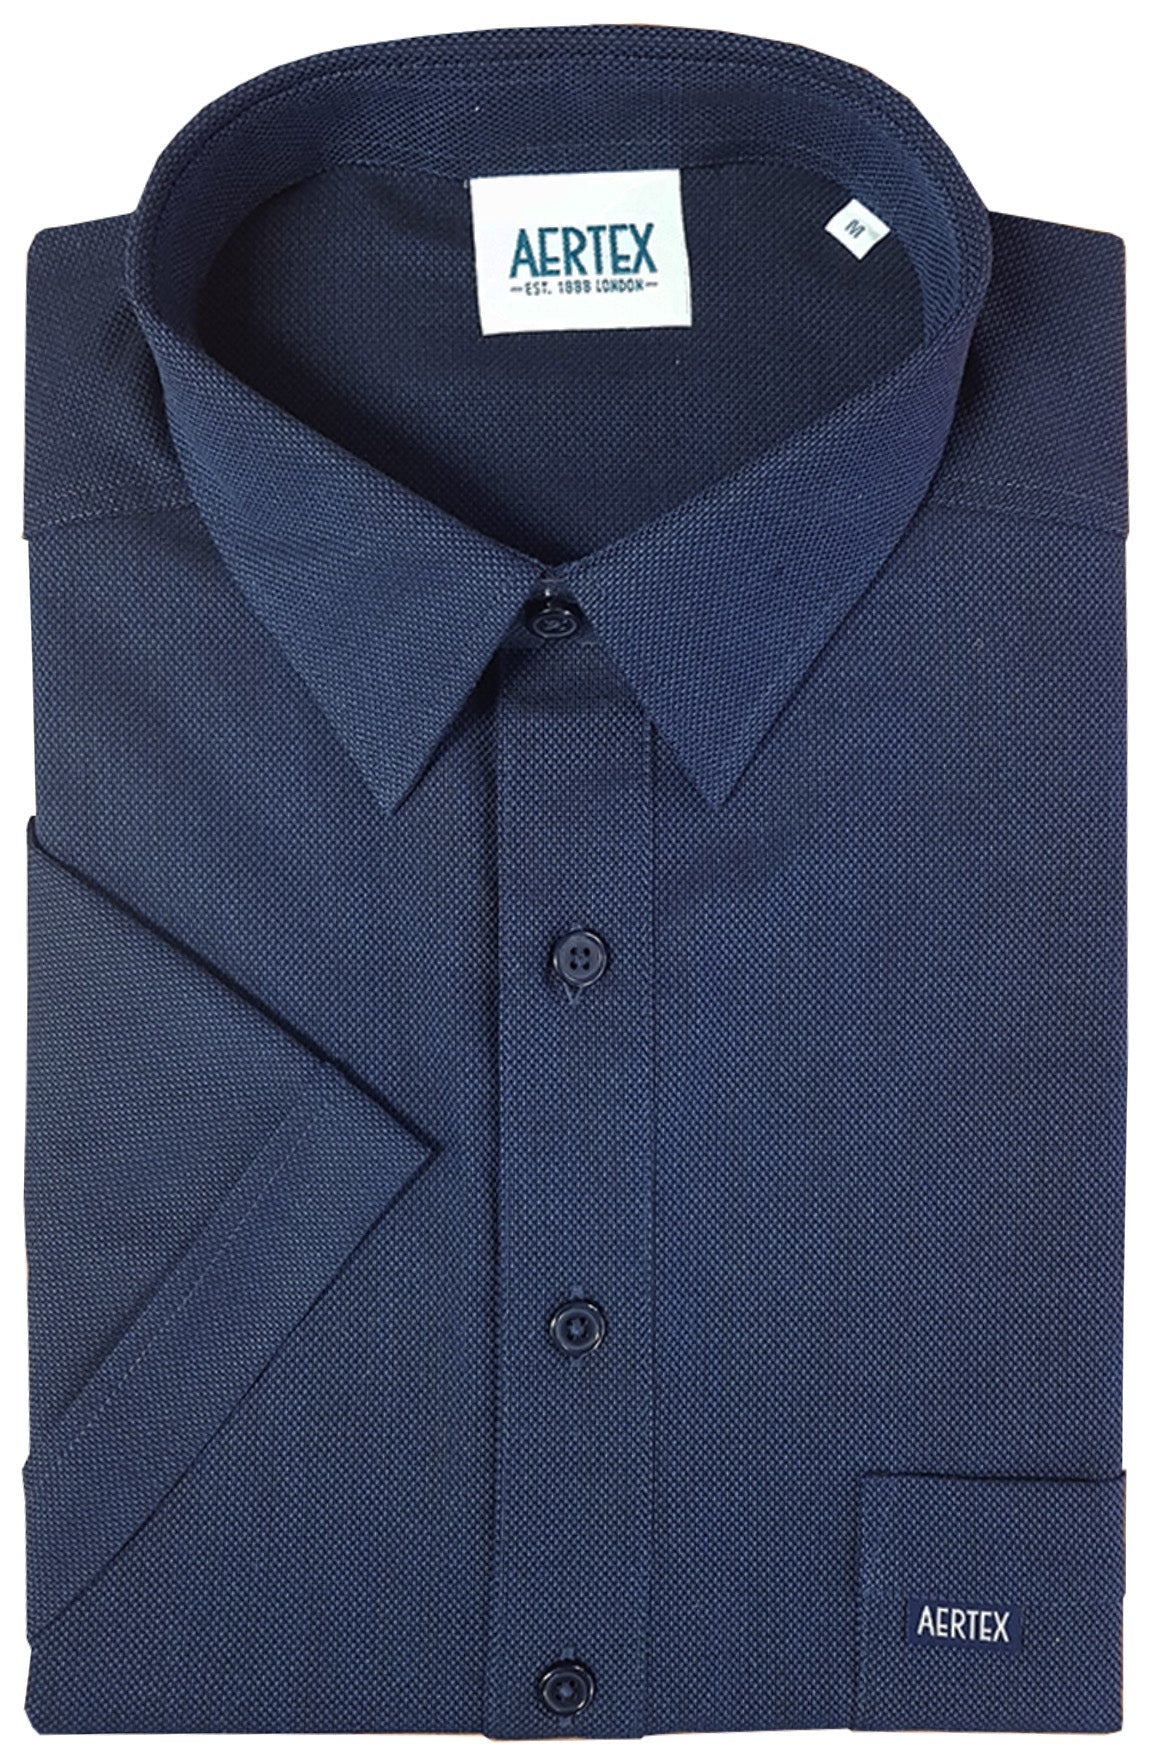 Aertex Taunton Short Sleeve Polo Shirt FYI175